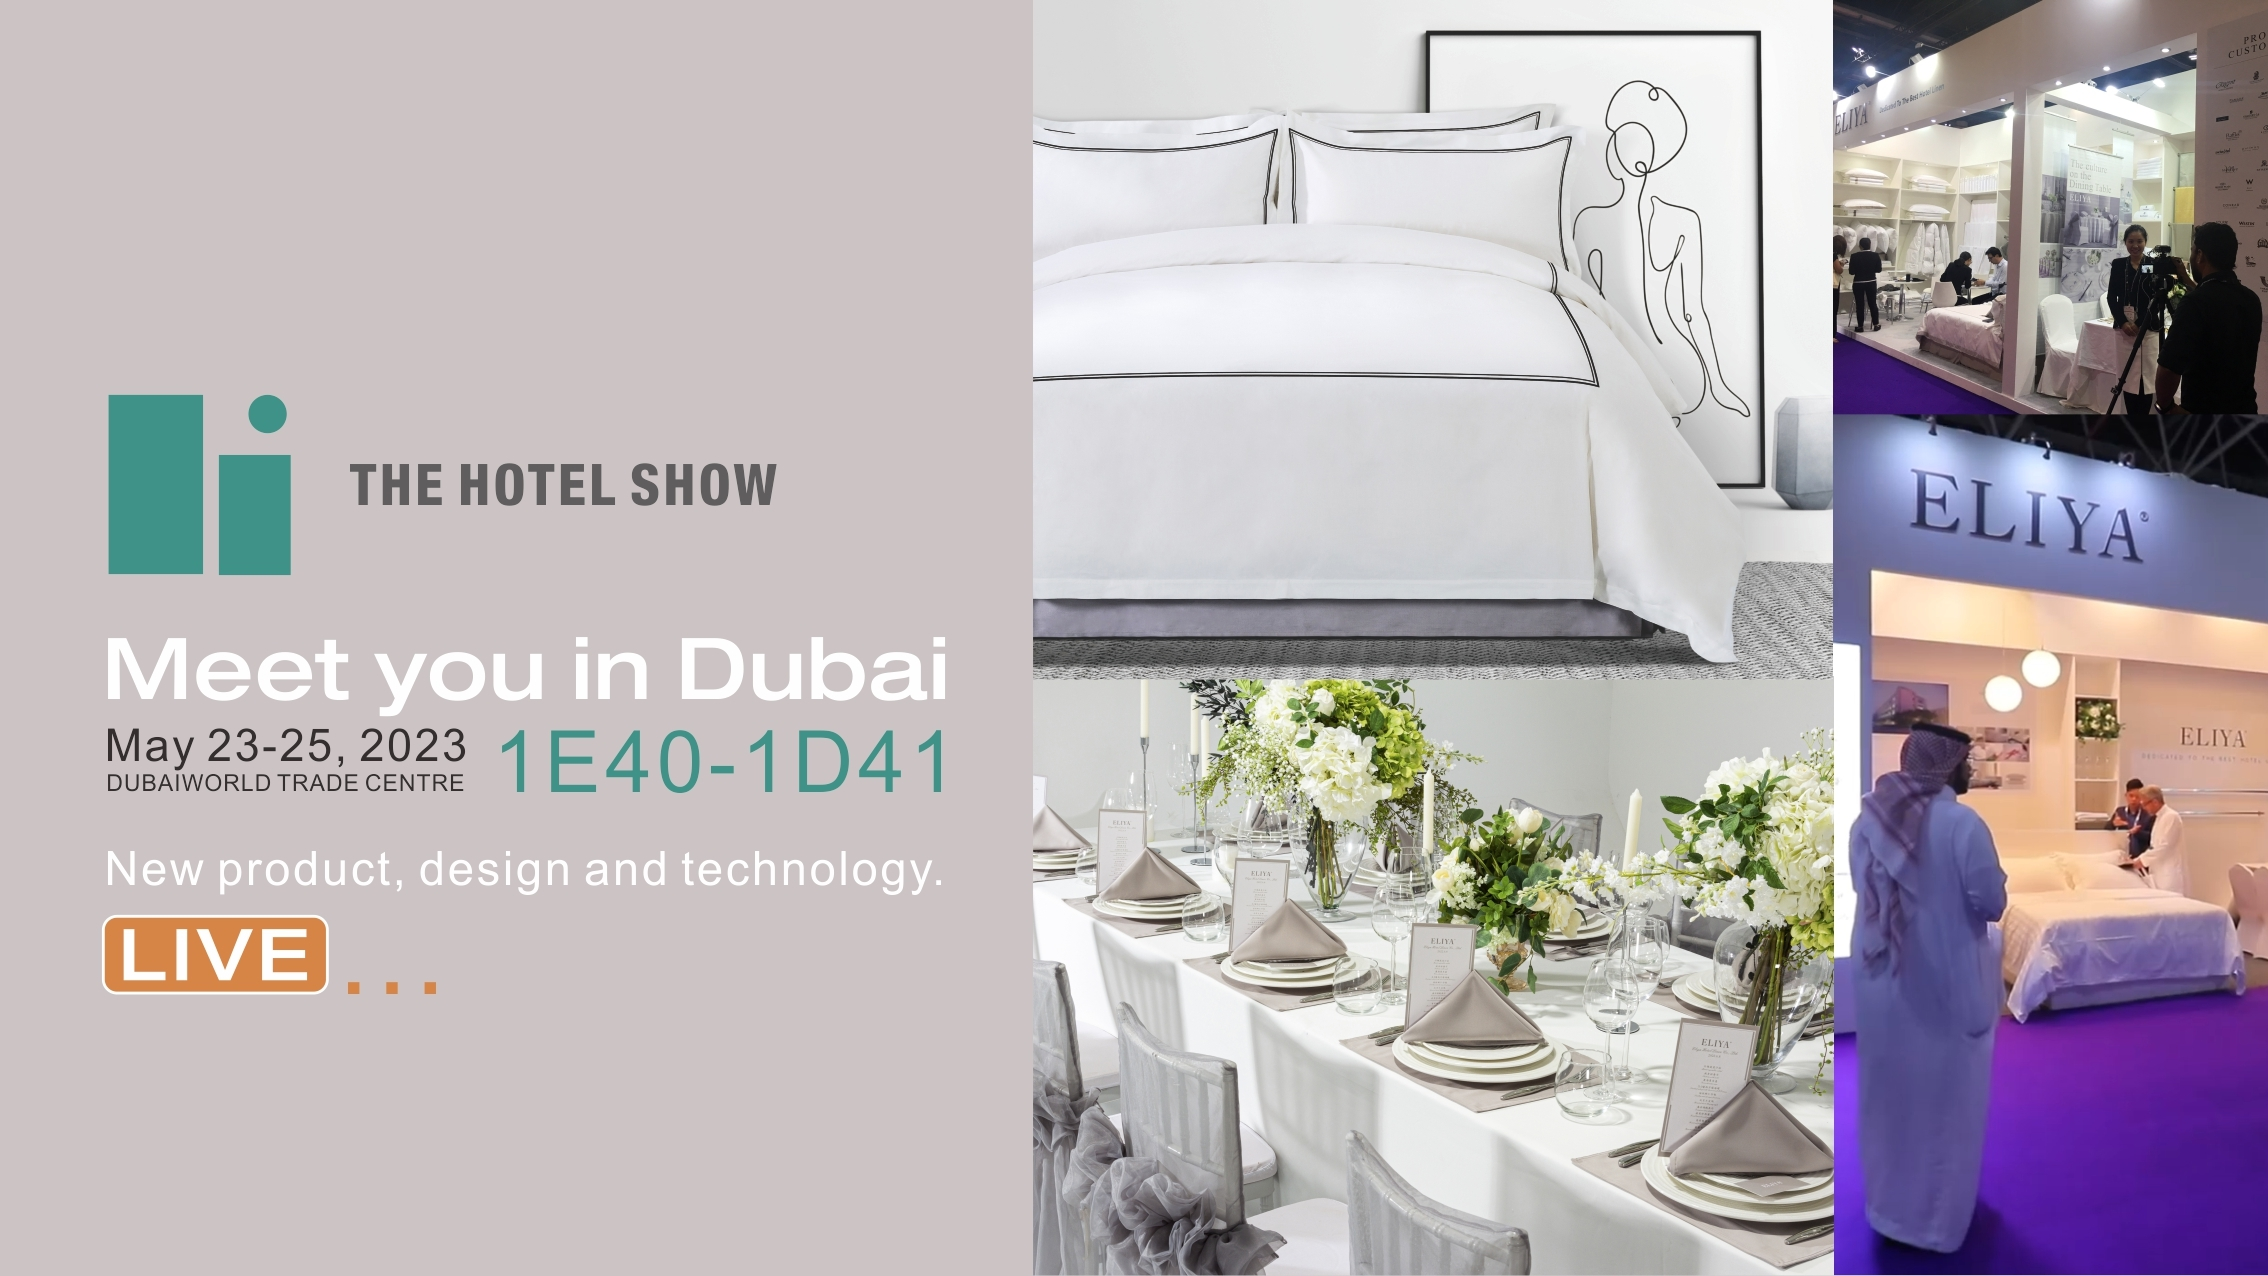 Eliya's exhibition at the hotel show Dubai